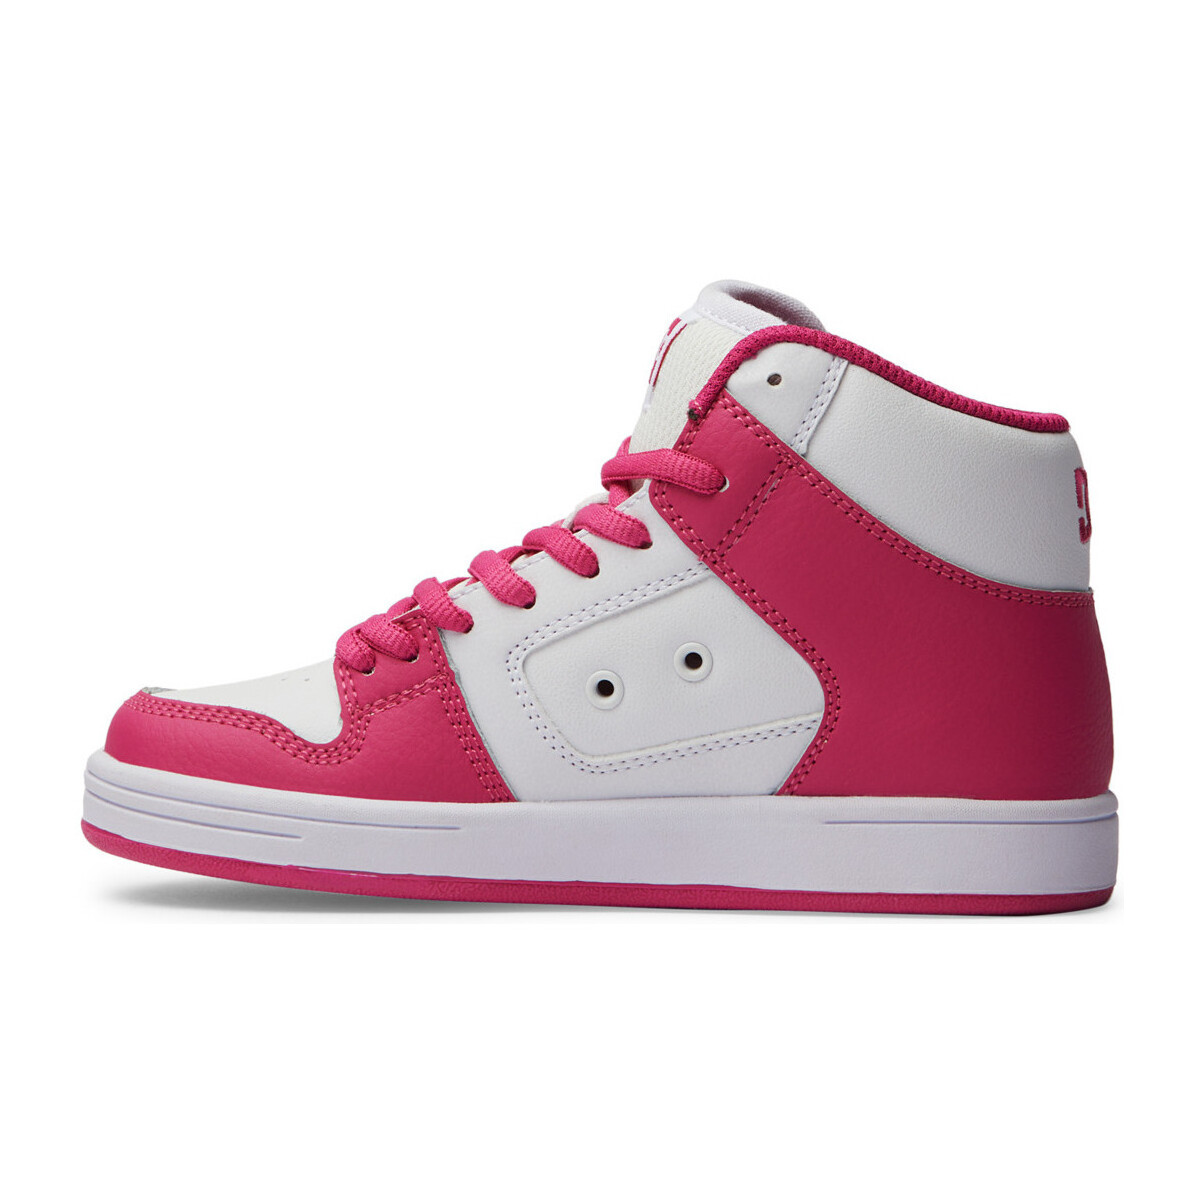 DC Shoes Rose Manteca 4 Hi NbWr1ePy